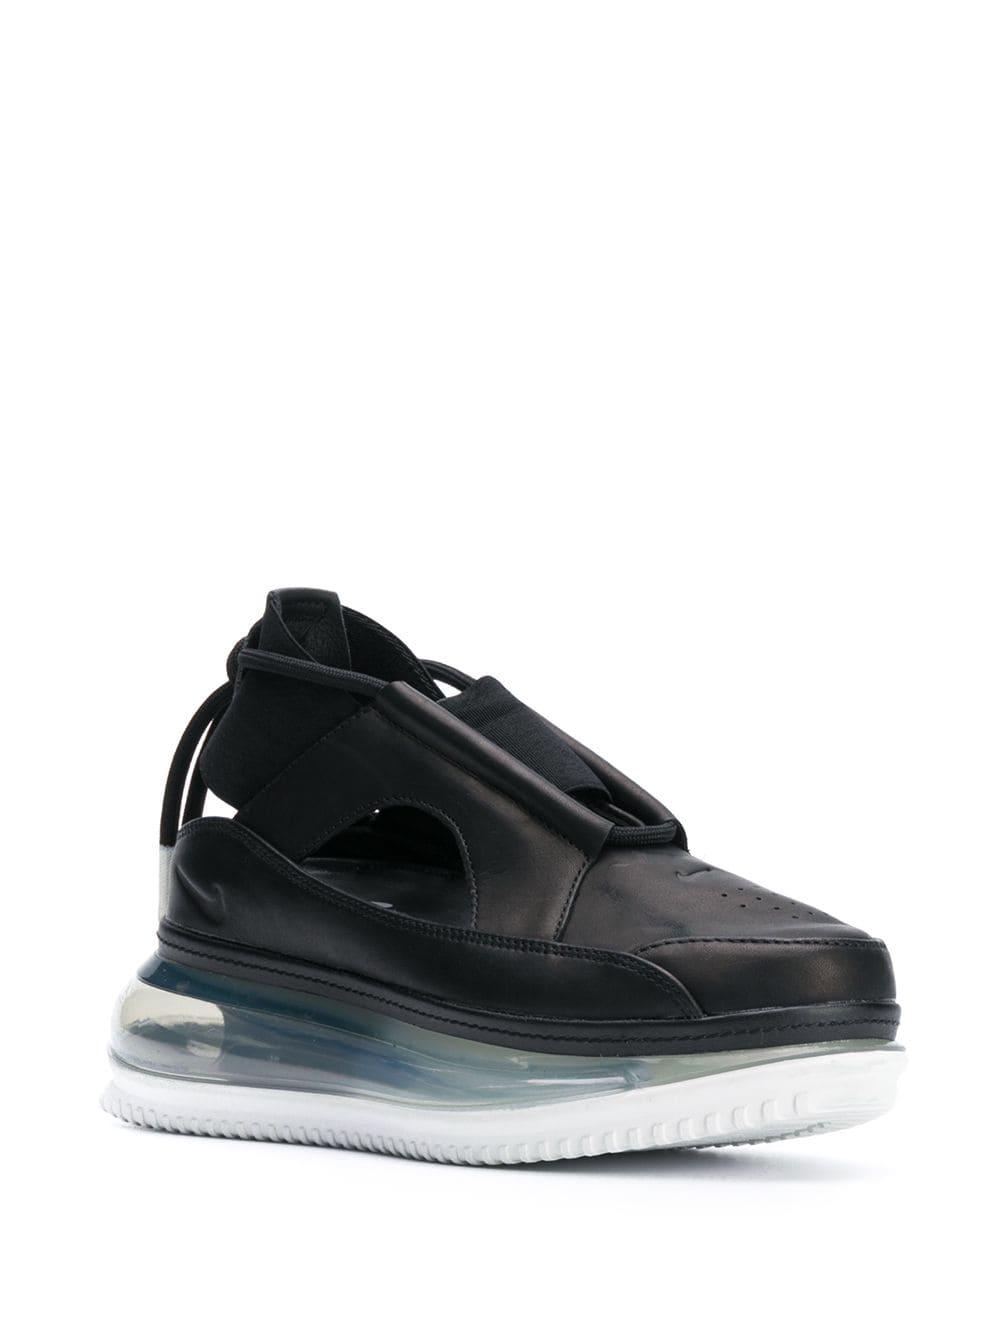 Nike W Air Max Ff 720 Sneakers in Black | Lyst